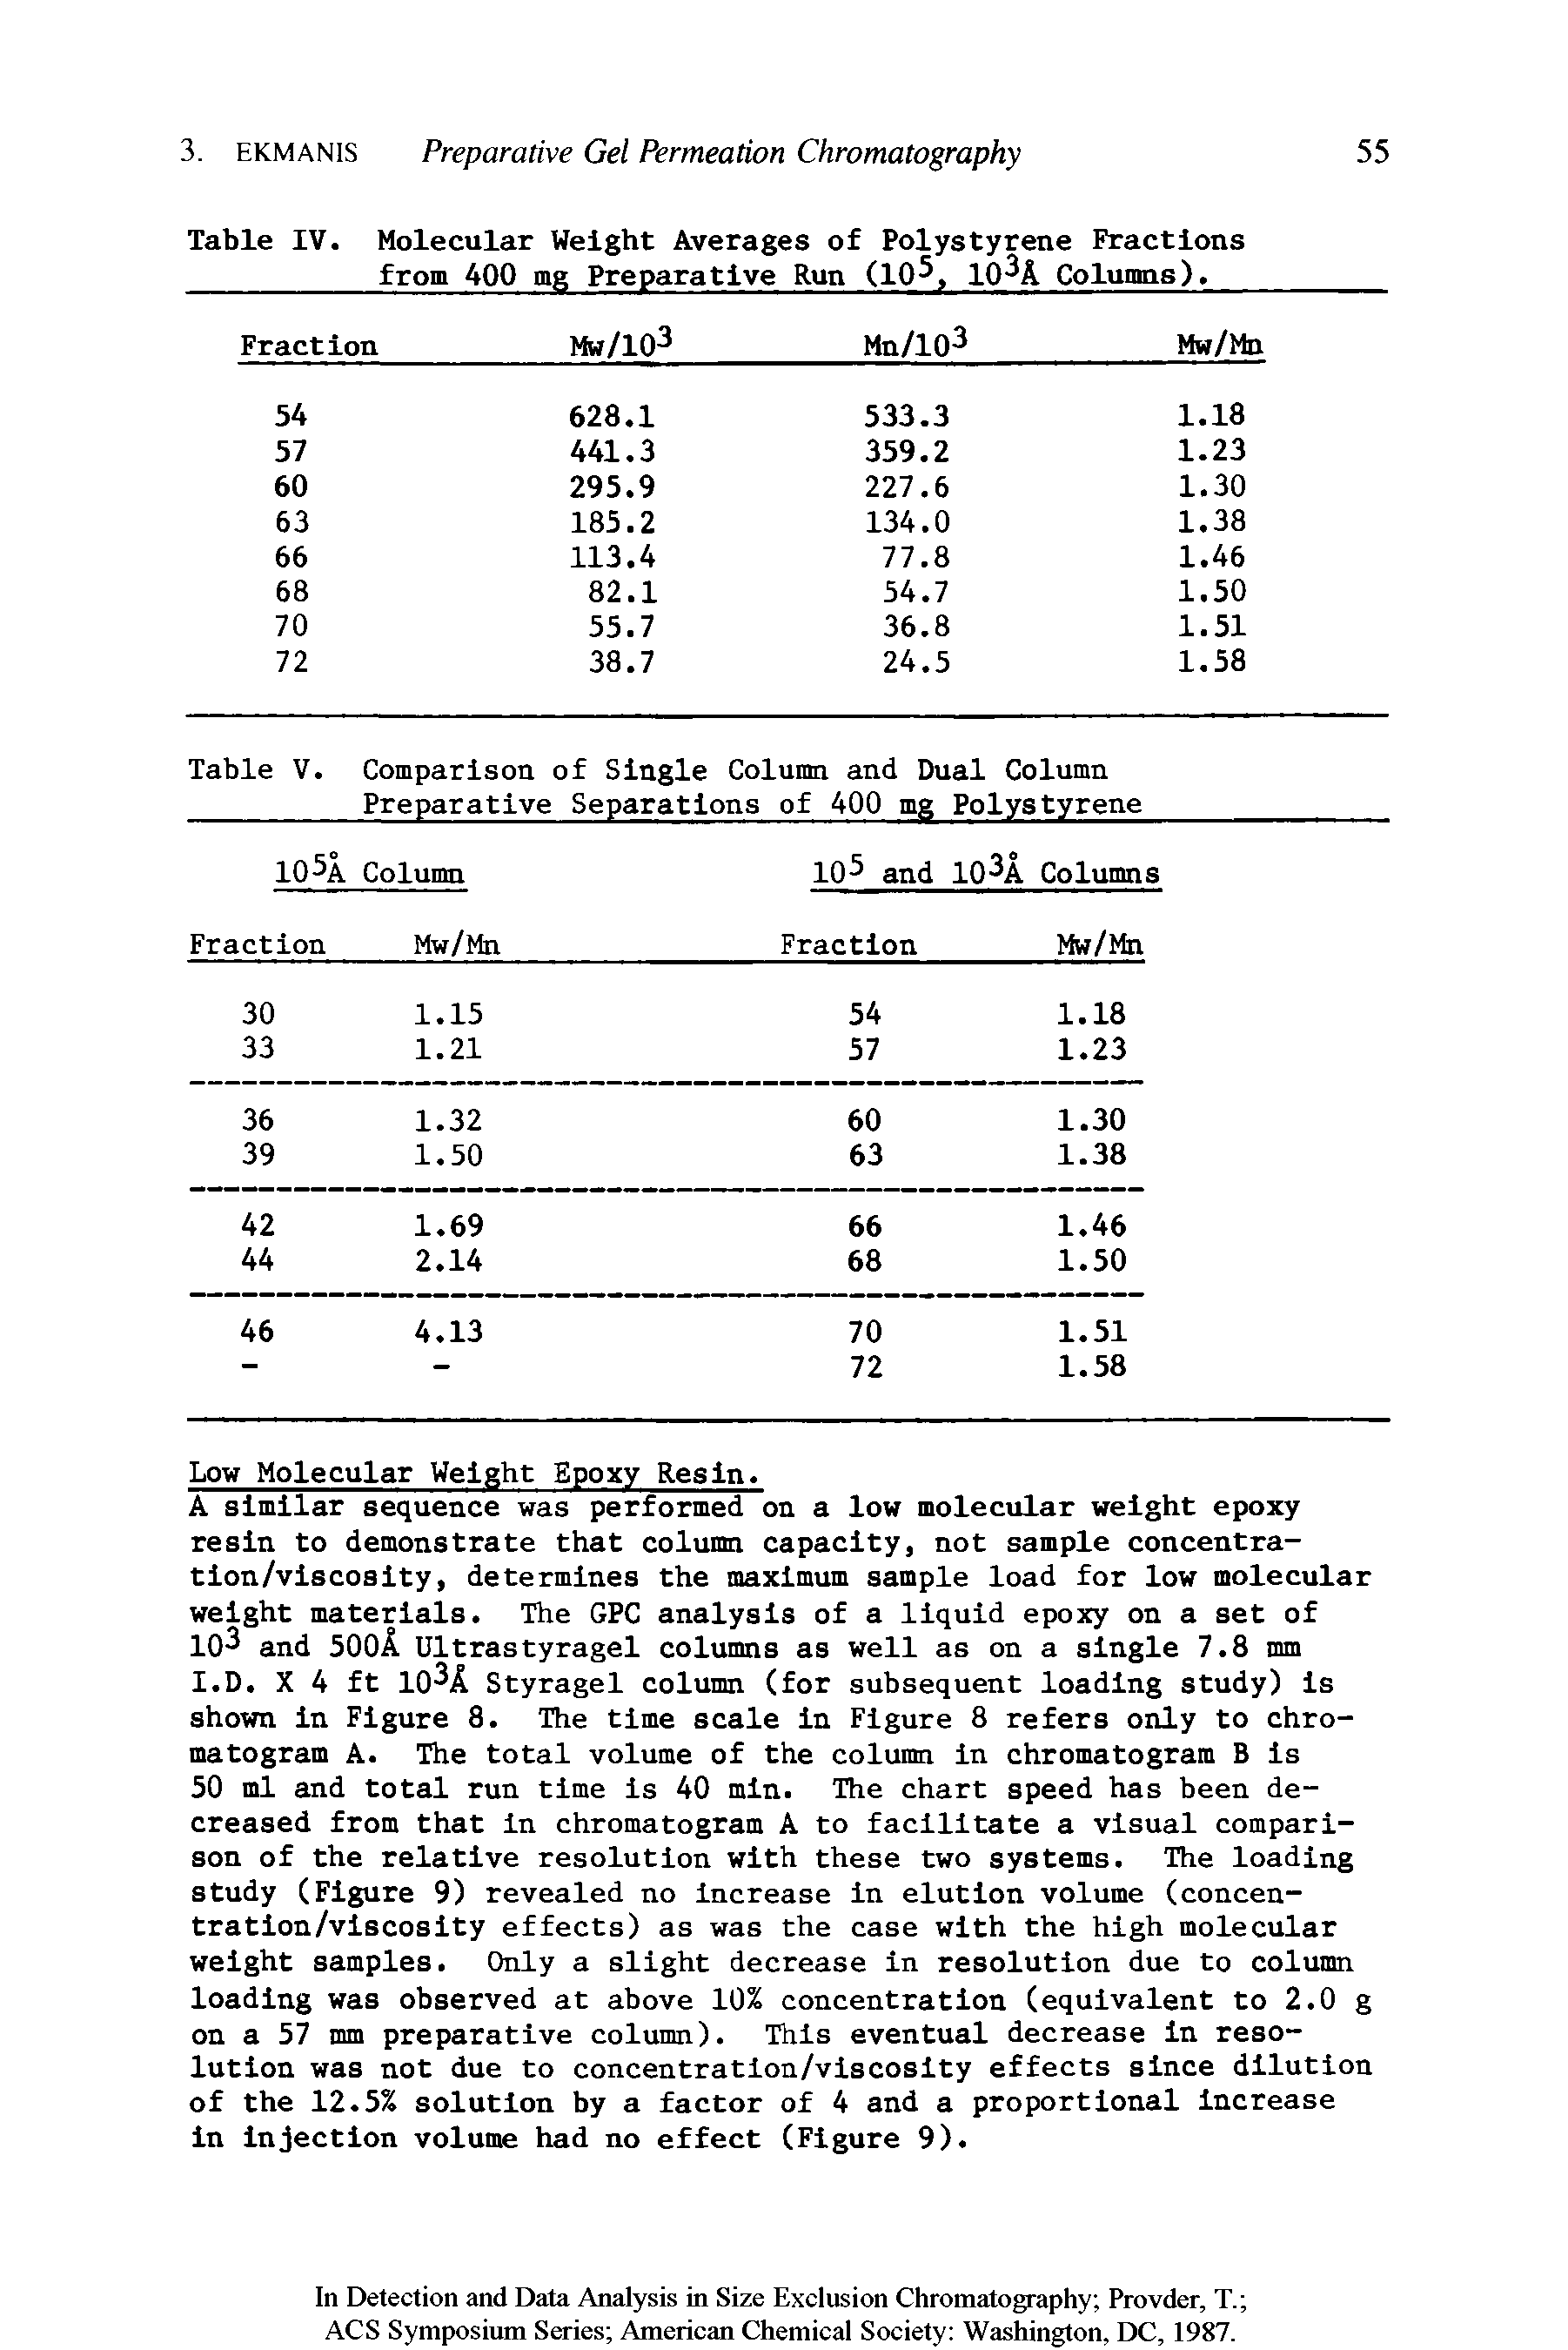 Table V. Comparison of Single Column and Dual Column ...